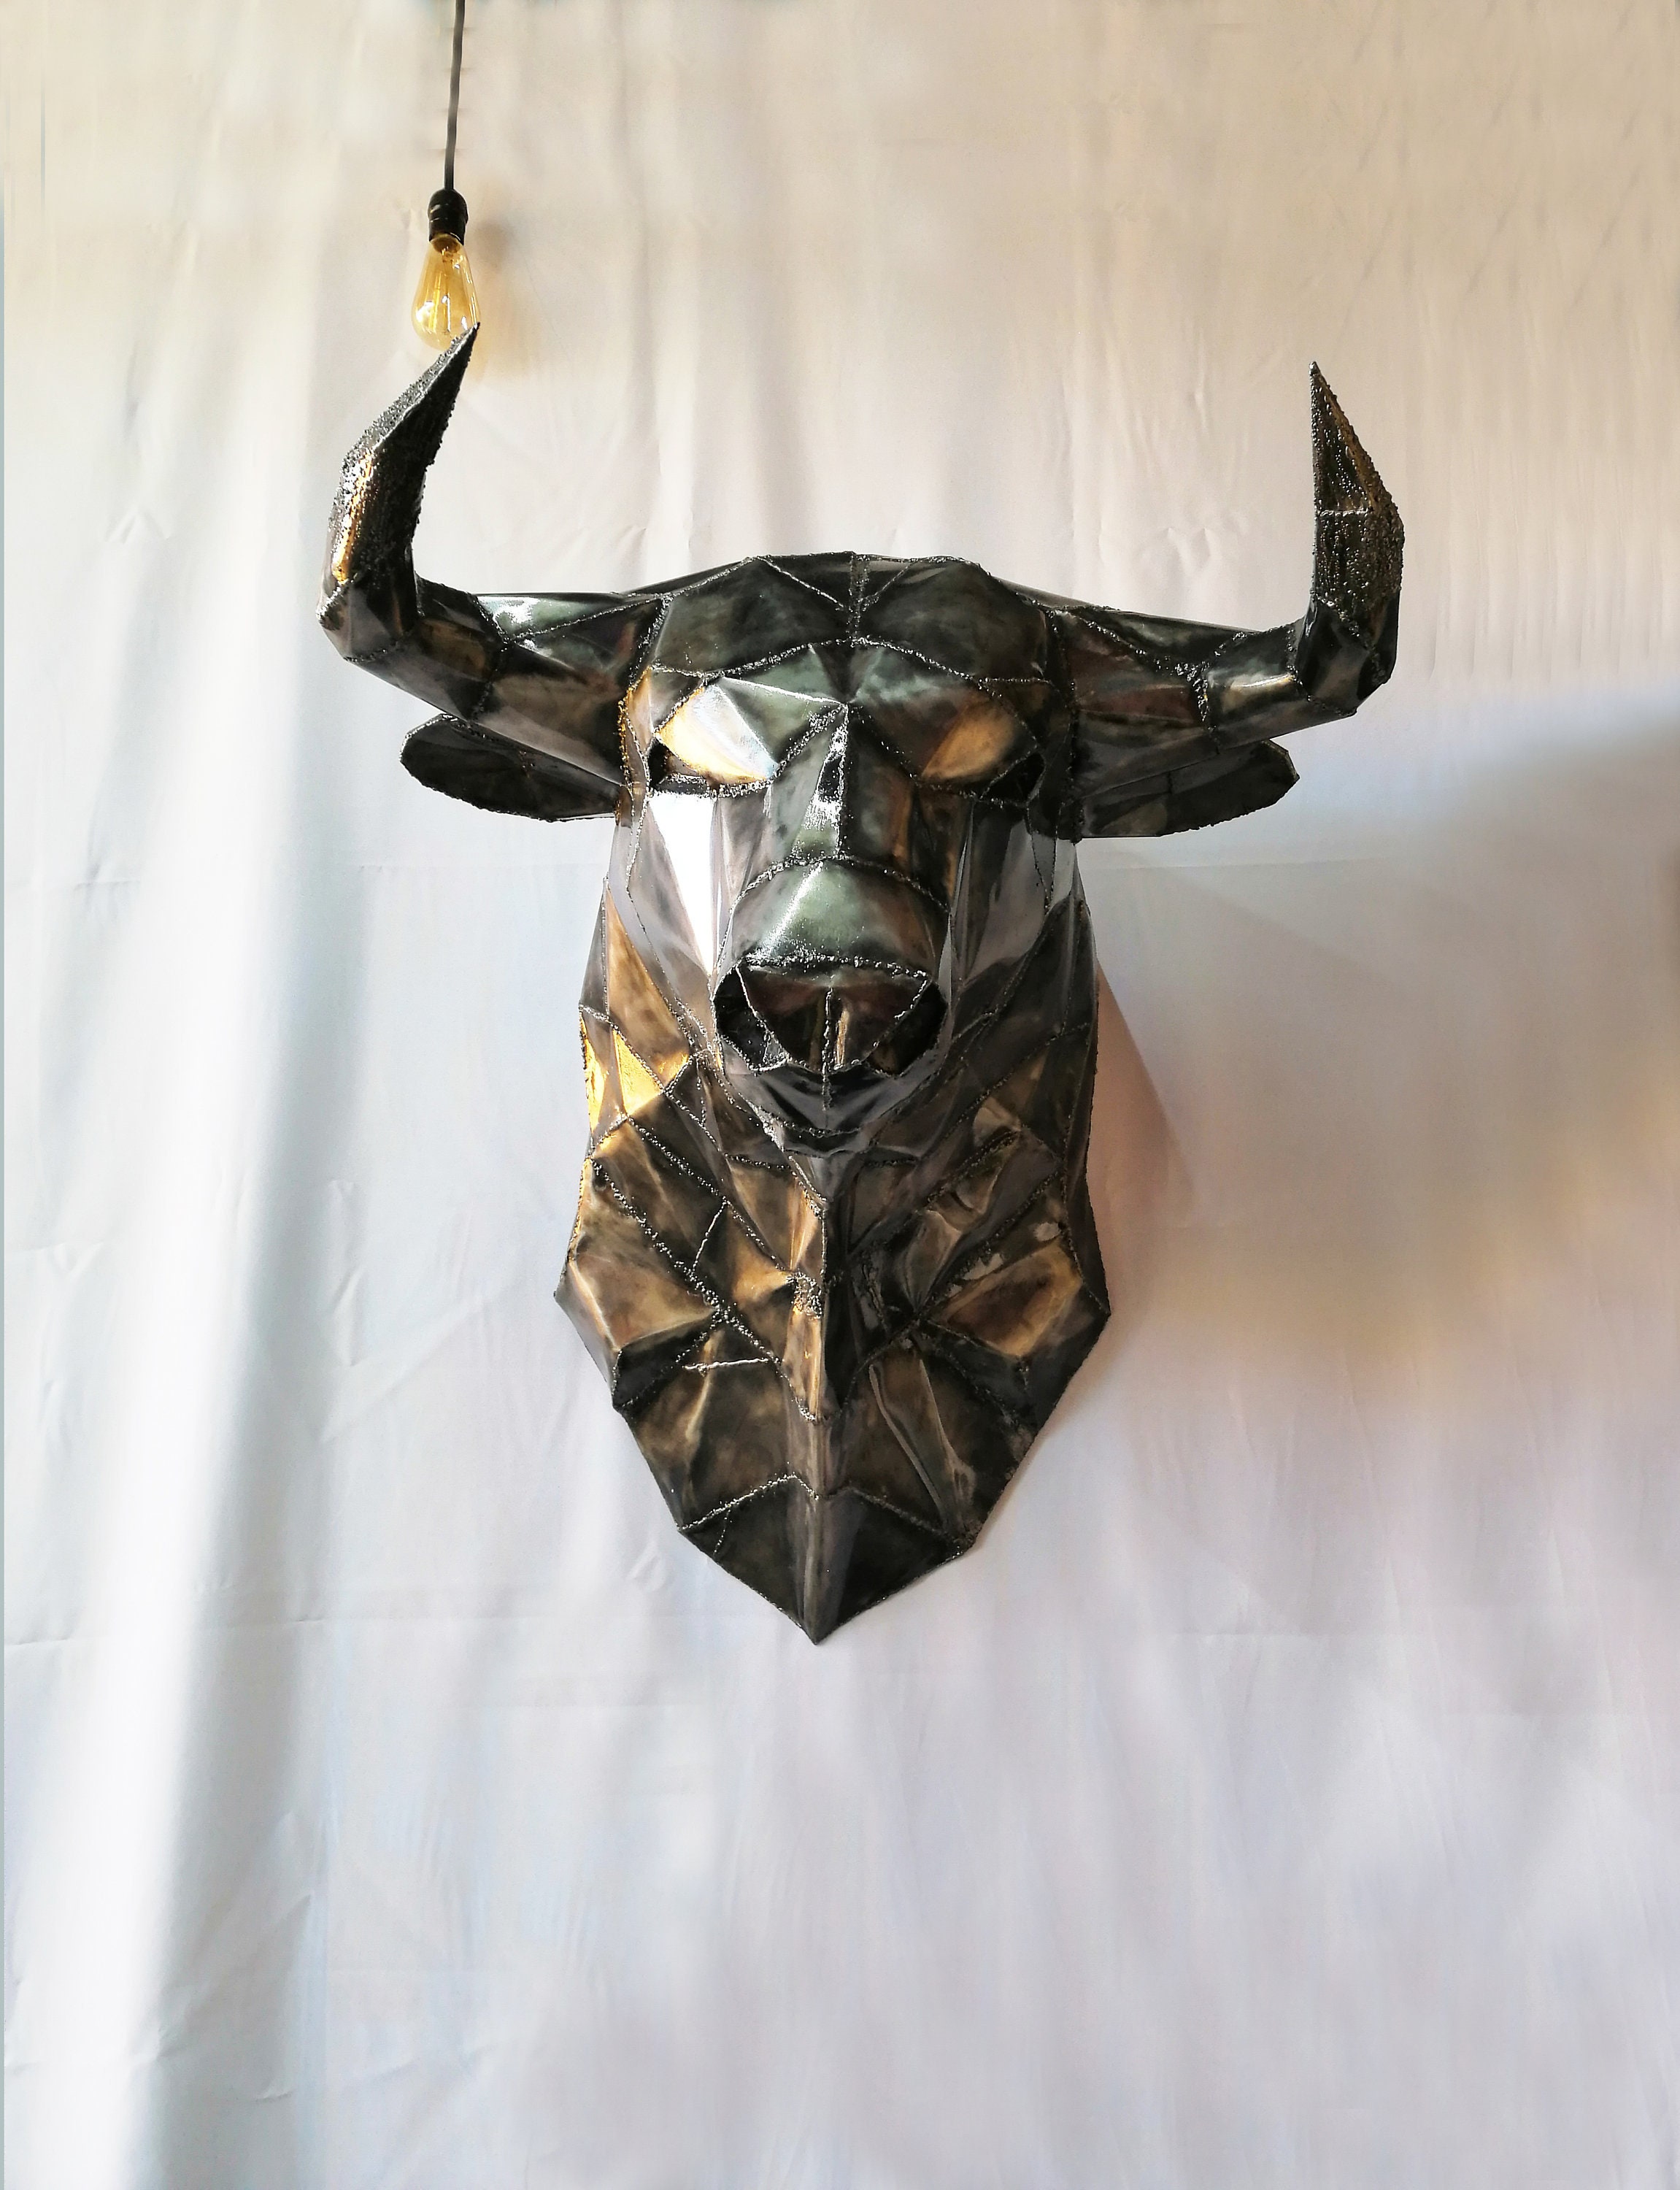 Metal Bull Bull Sculpture De Miura Metal Bull Sculpture photo photo